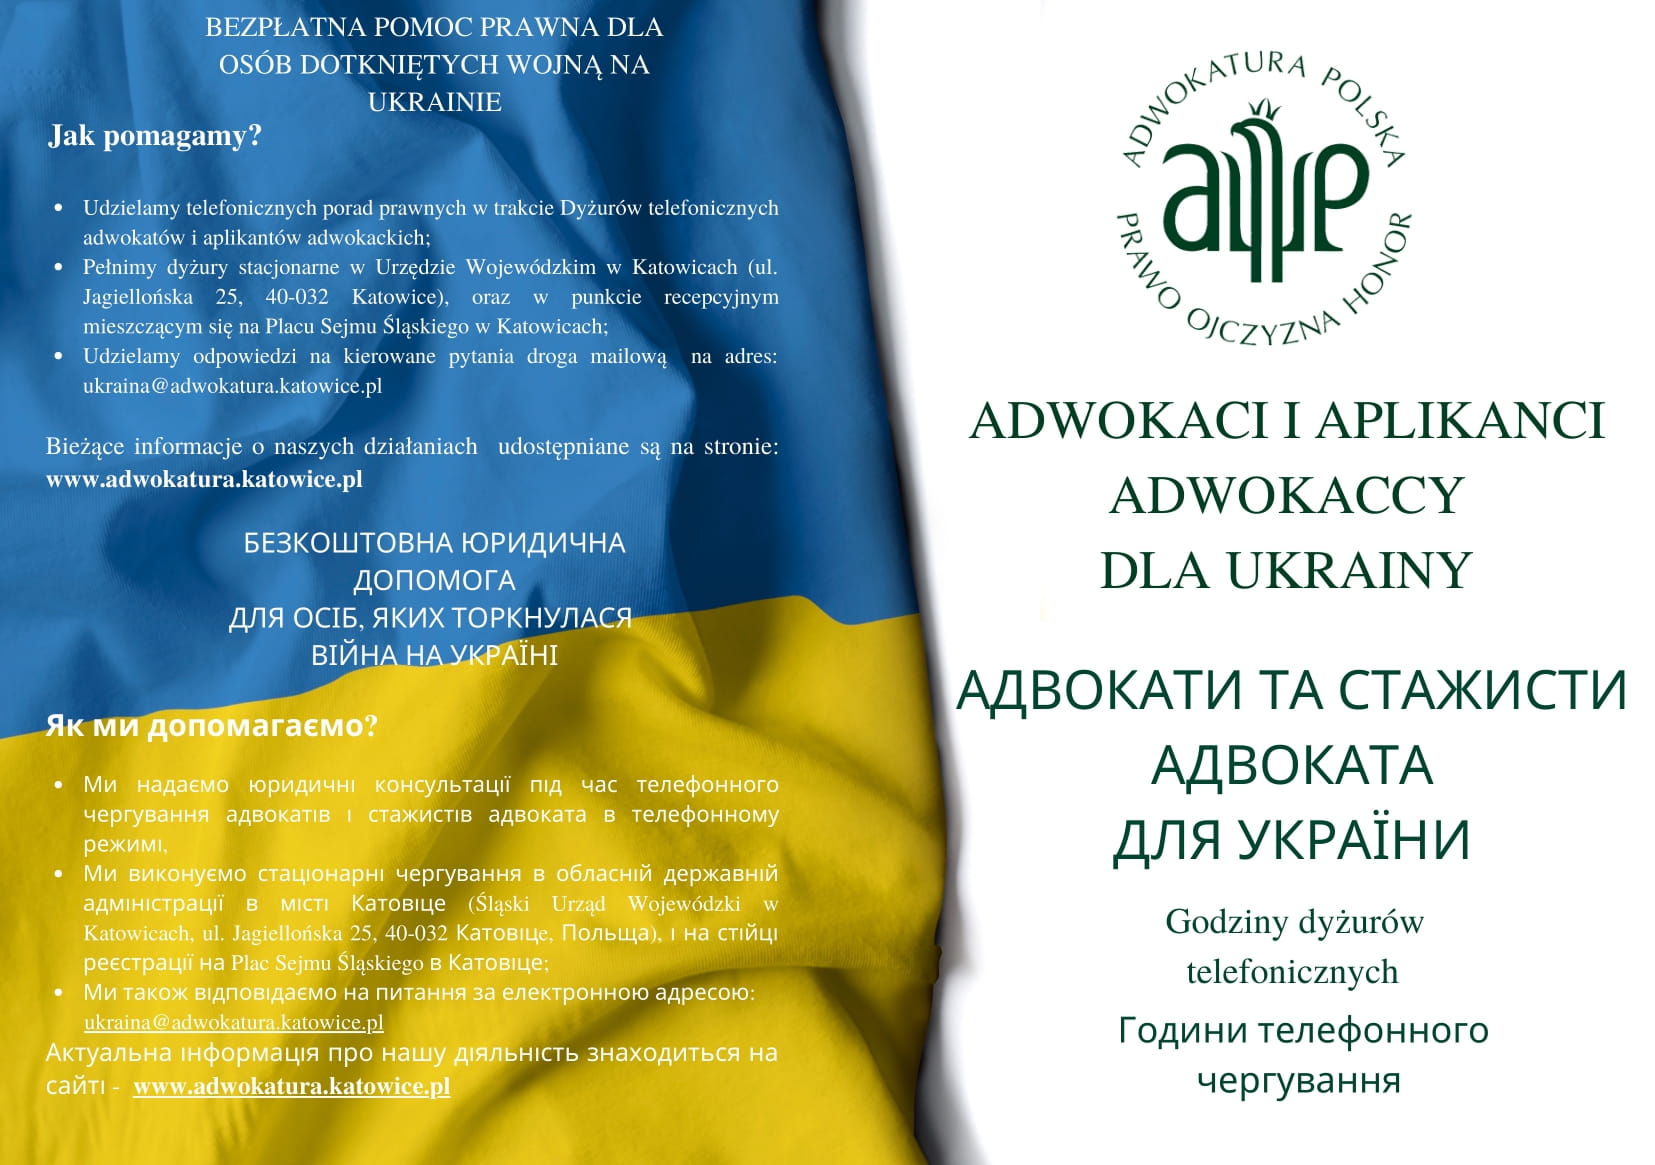 Ulotka adwokaci dla Ukrainy 3 15706944 14002178 1